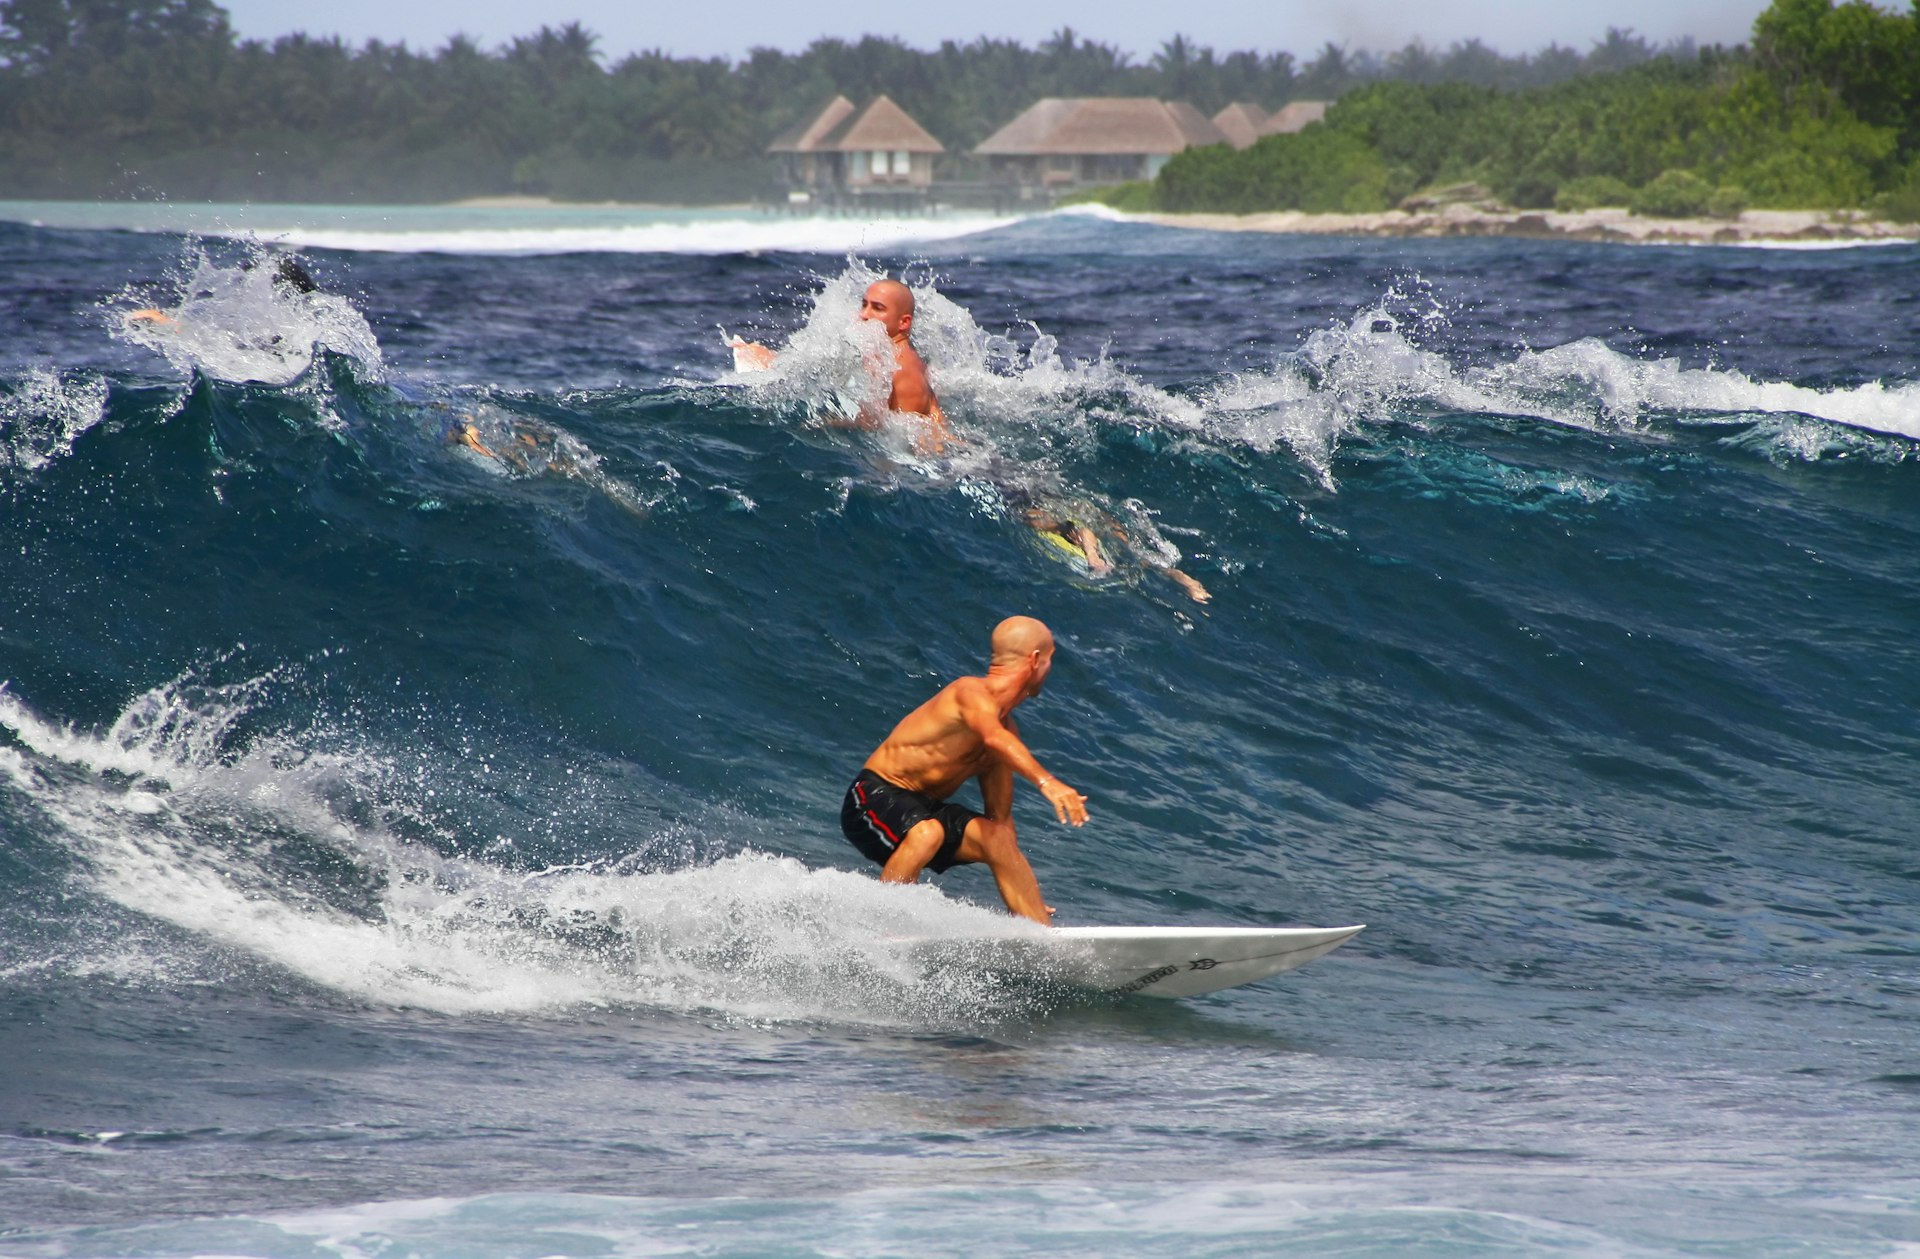 Two surfers ride breaking waves